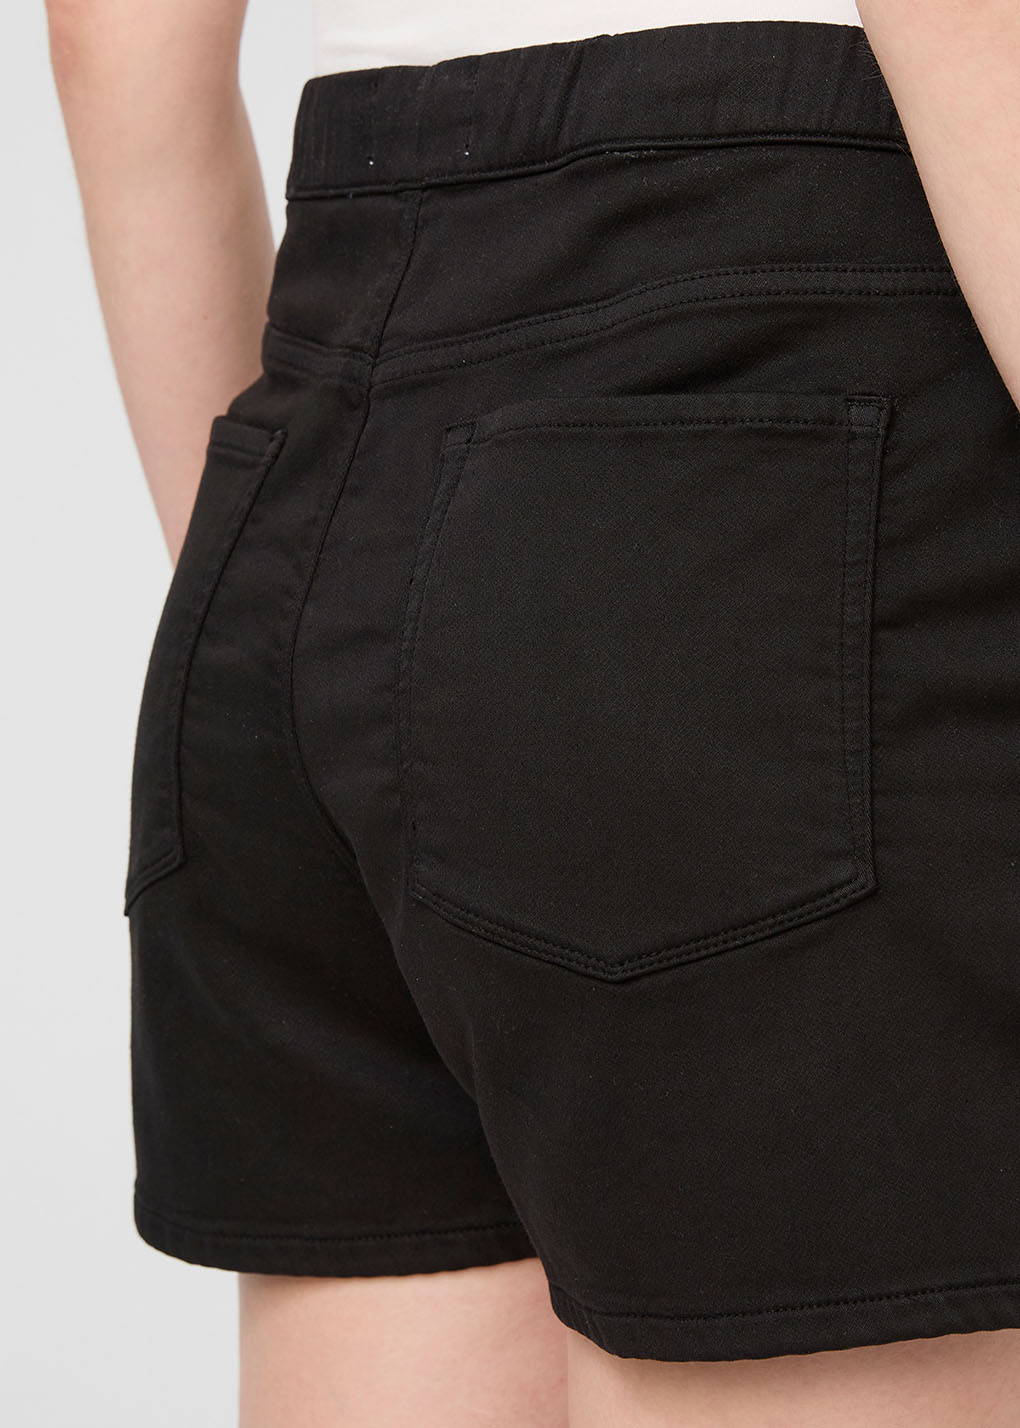 womens black pull on drawstring shorts back waistband detail